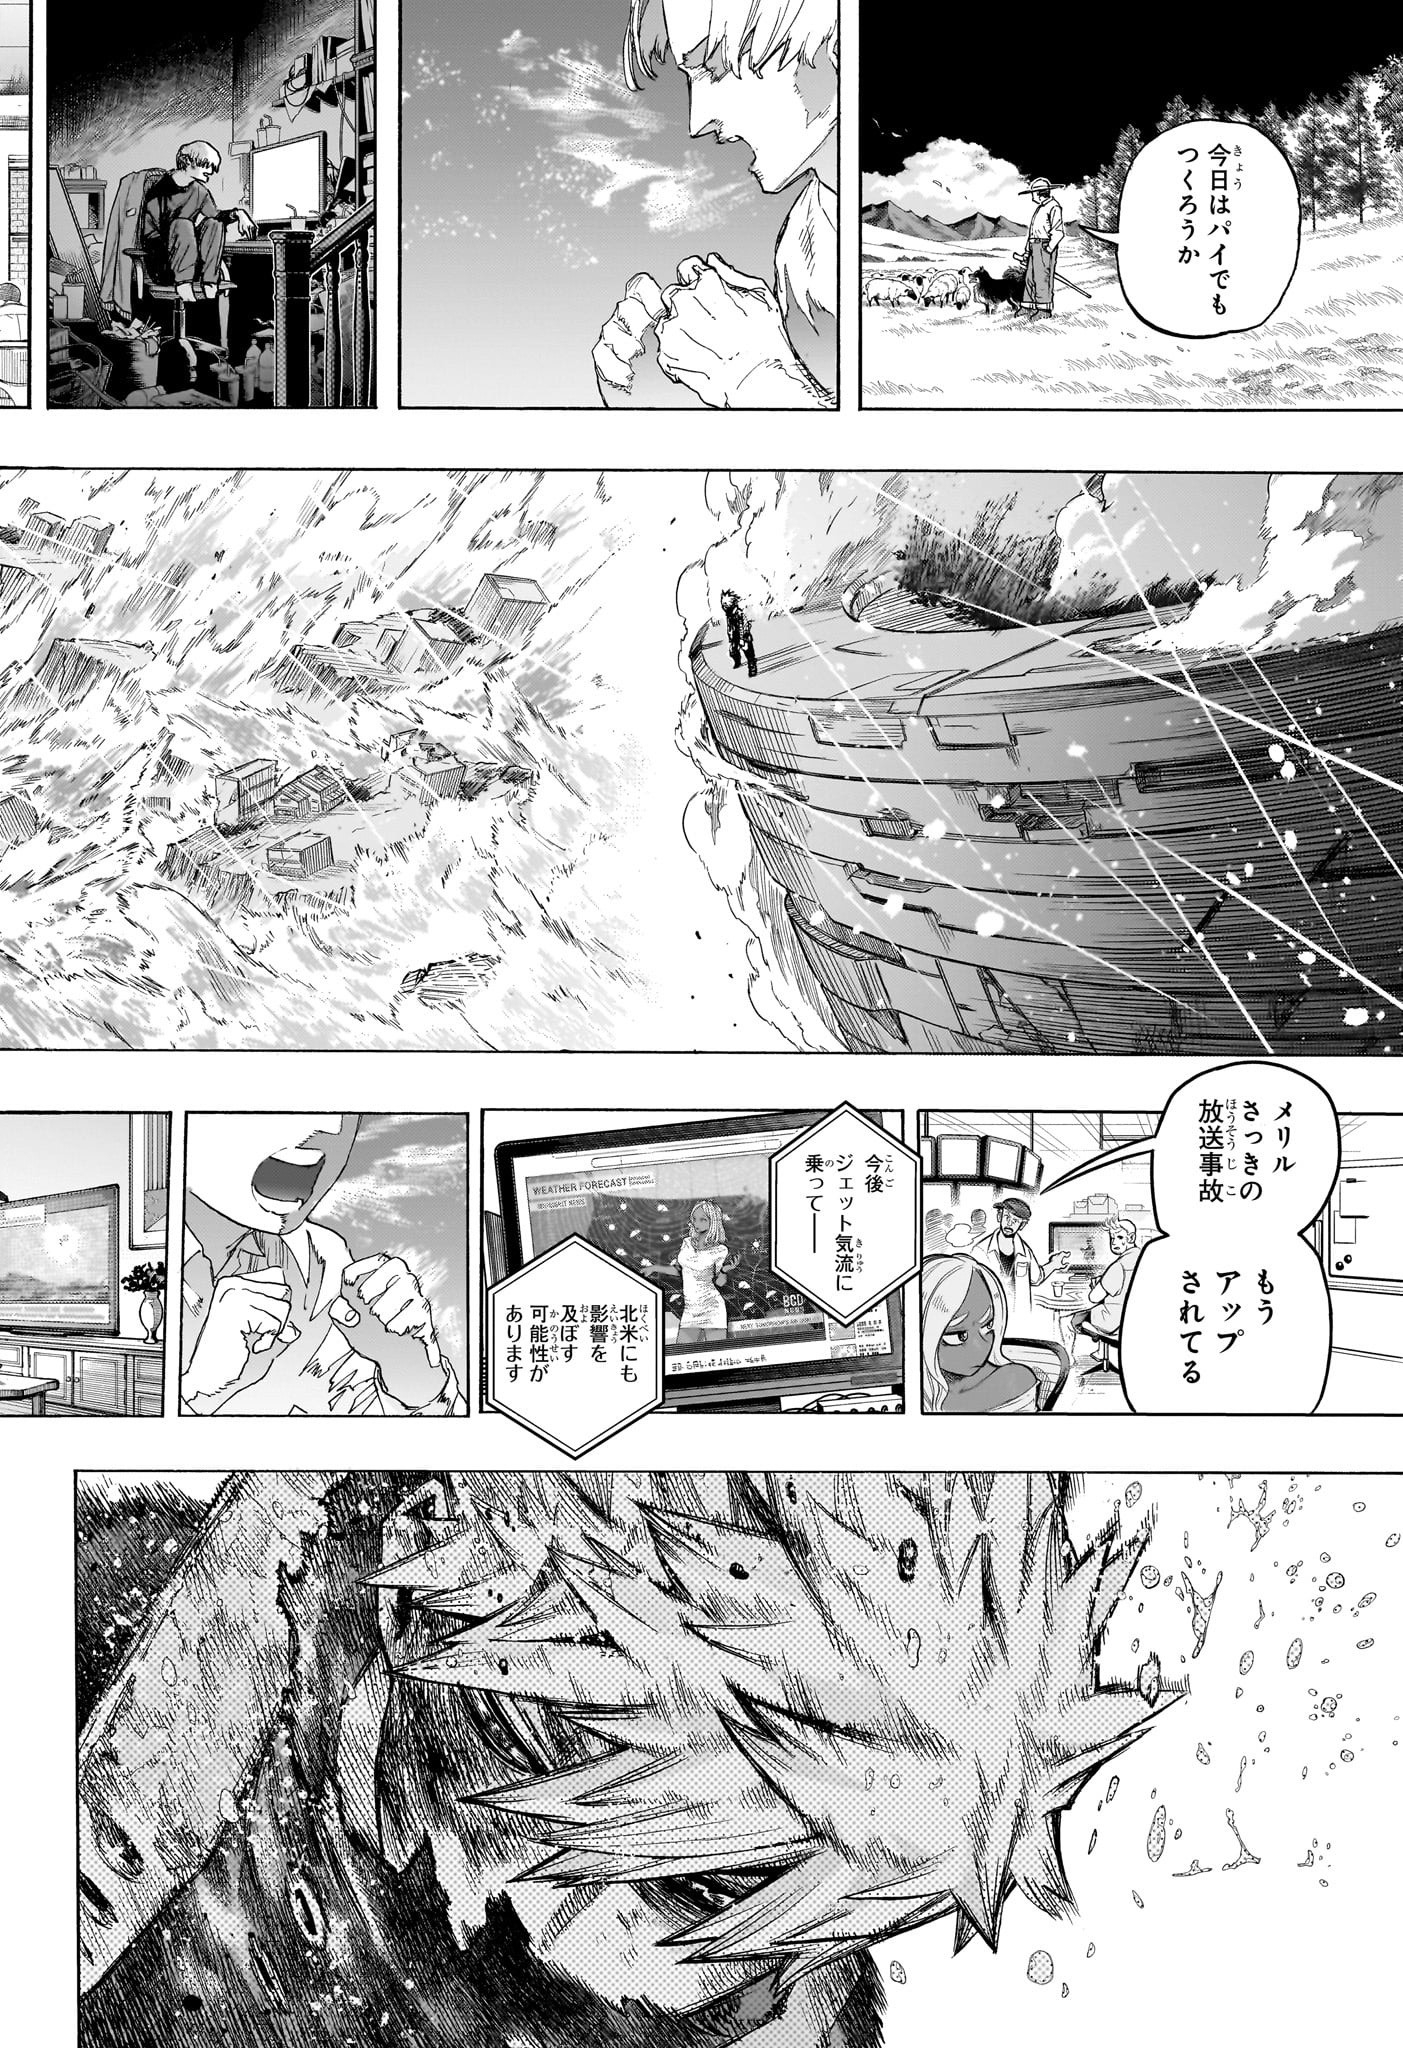 Boku no Hero Academia - Chapter 404 - Page 2